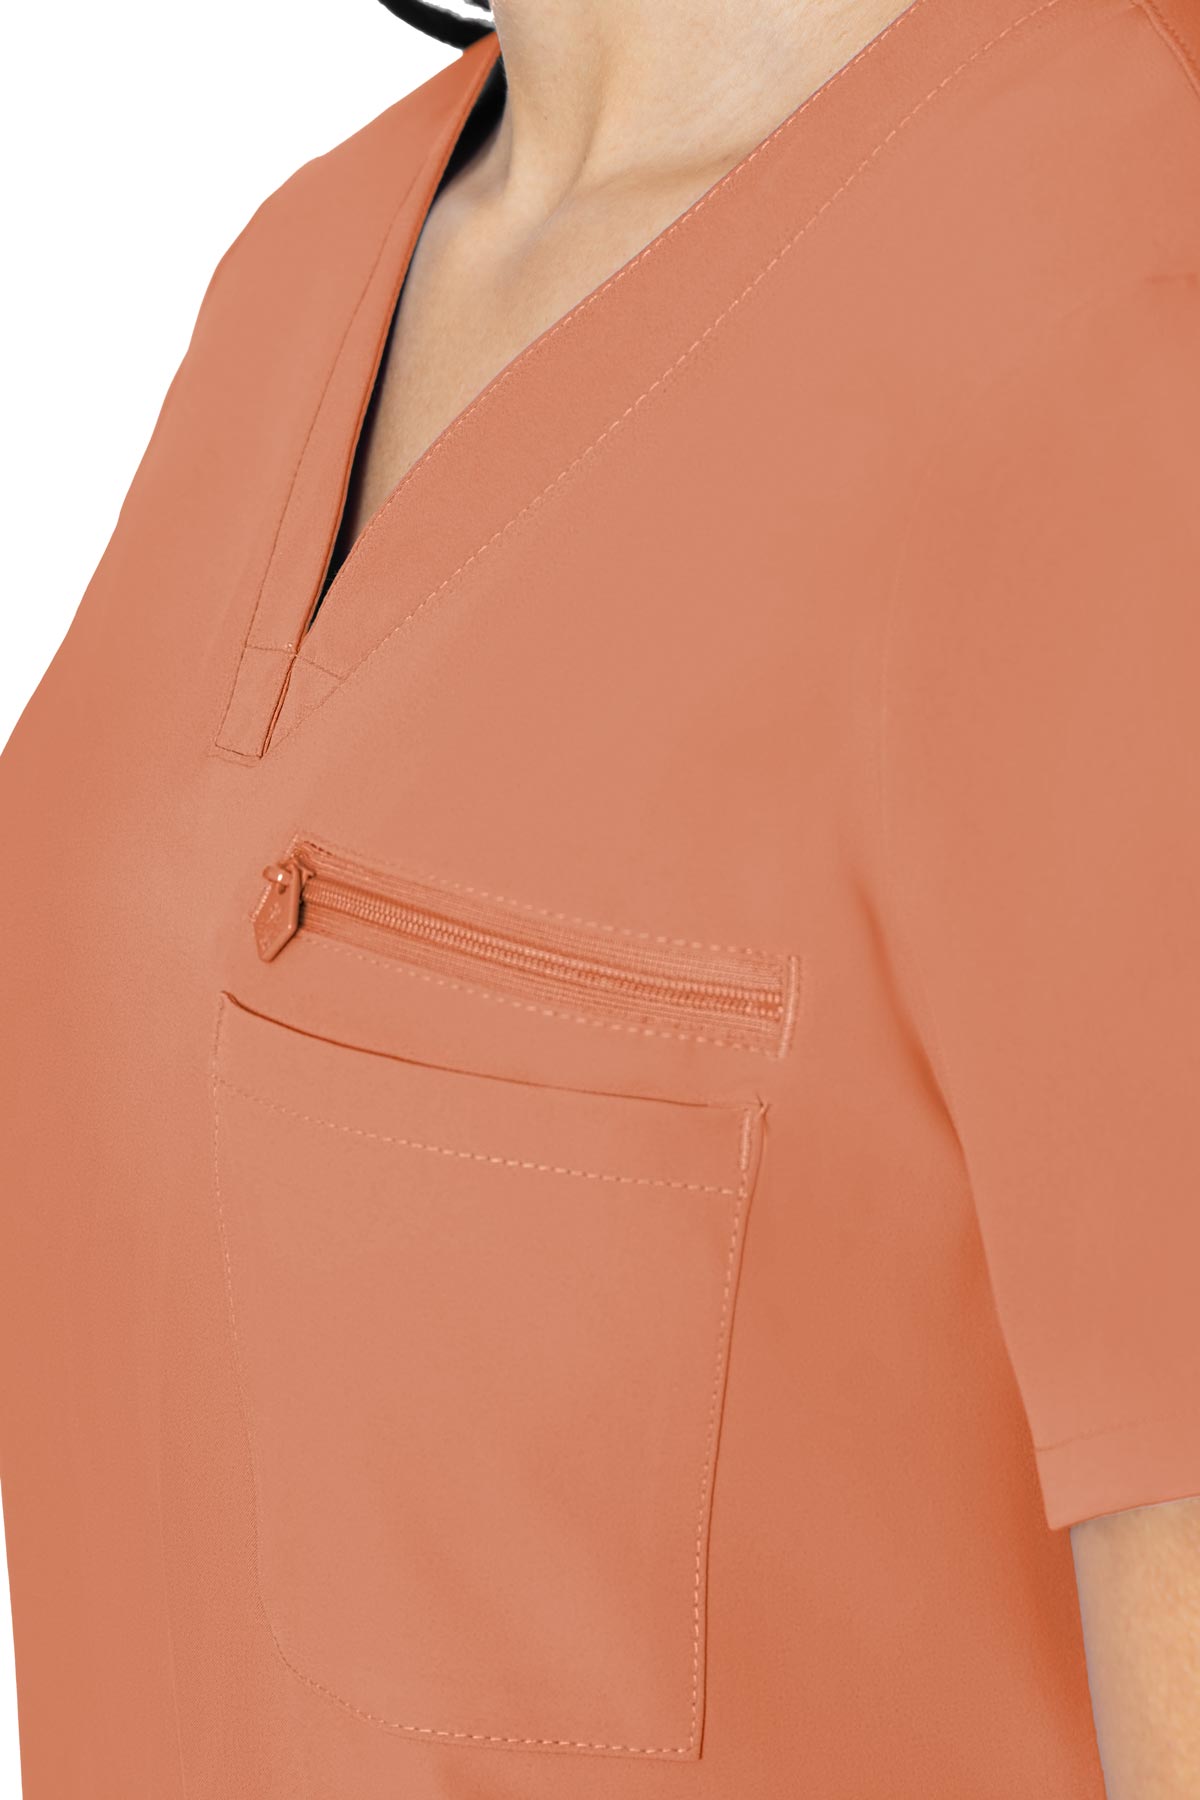 Med Couture Peaches 1 Pocket Zipper Top (11 Colors) XS-3XL